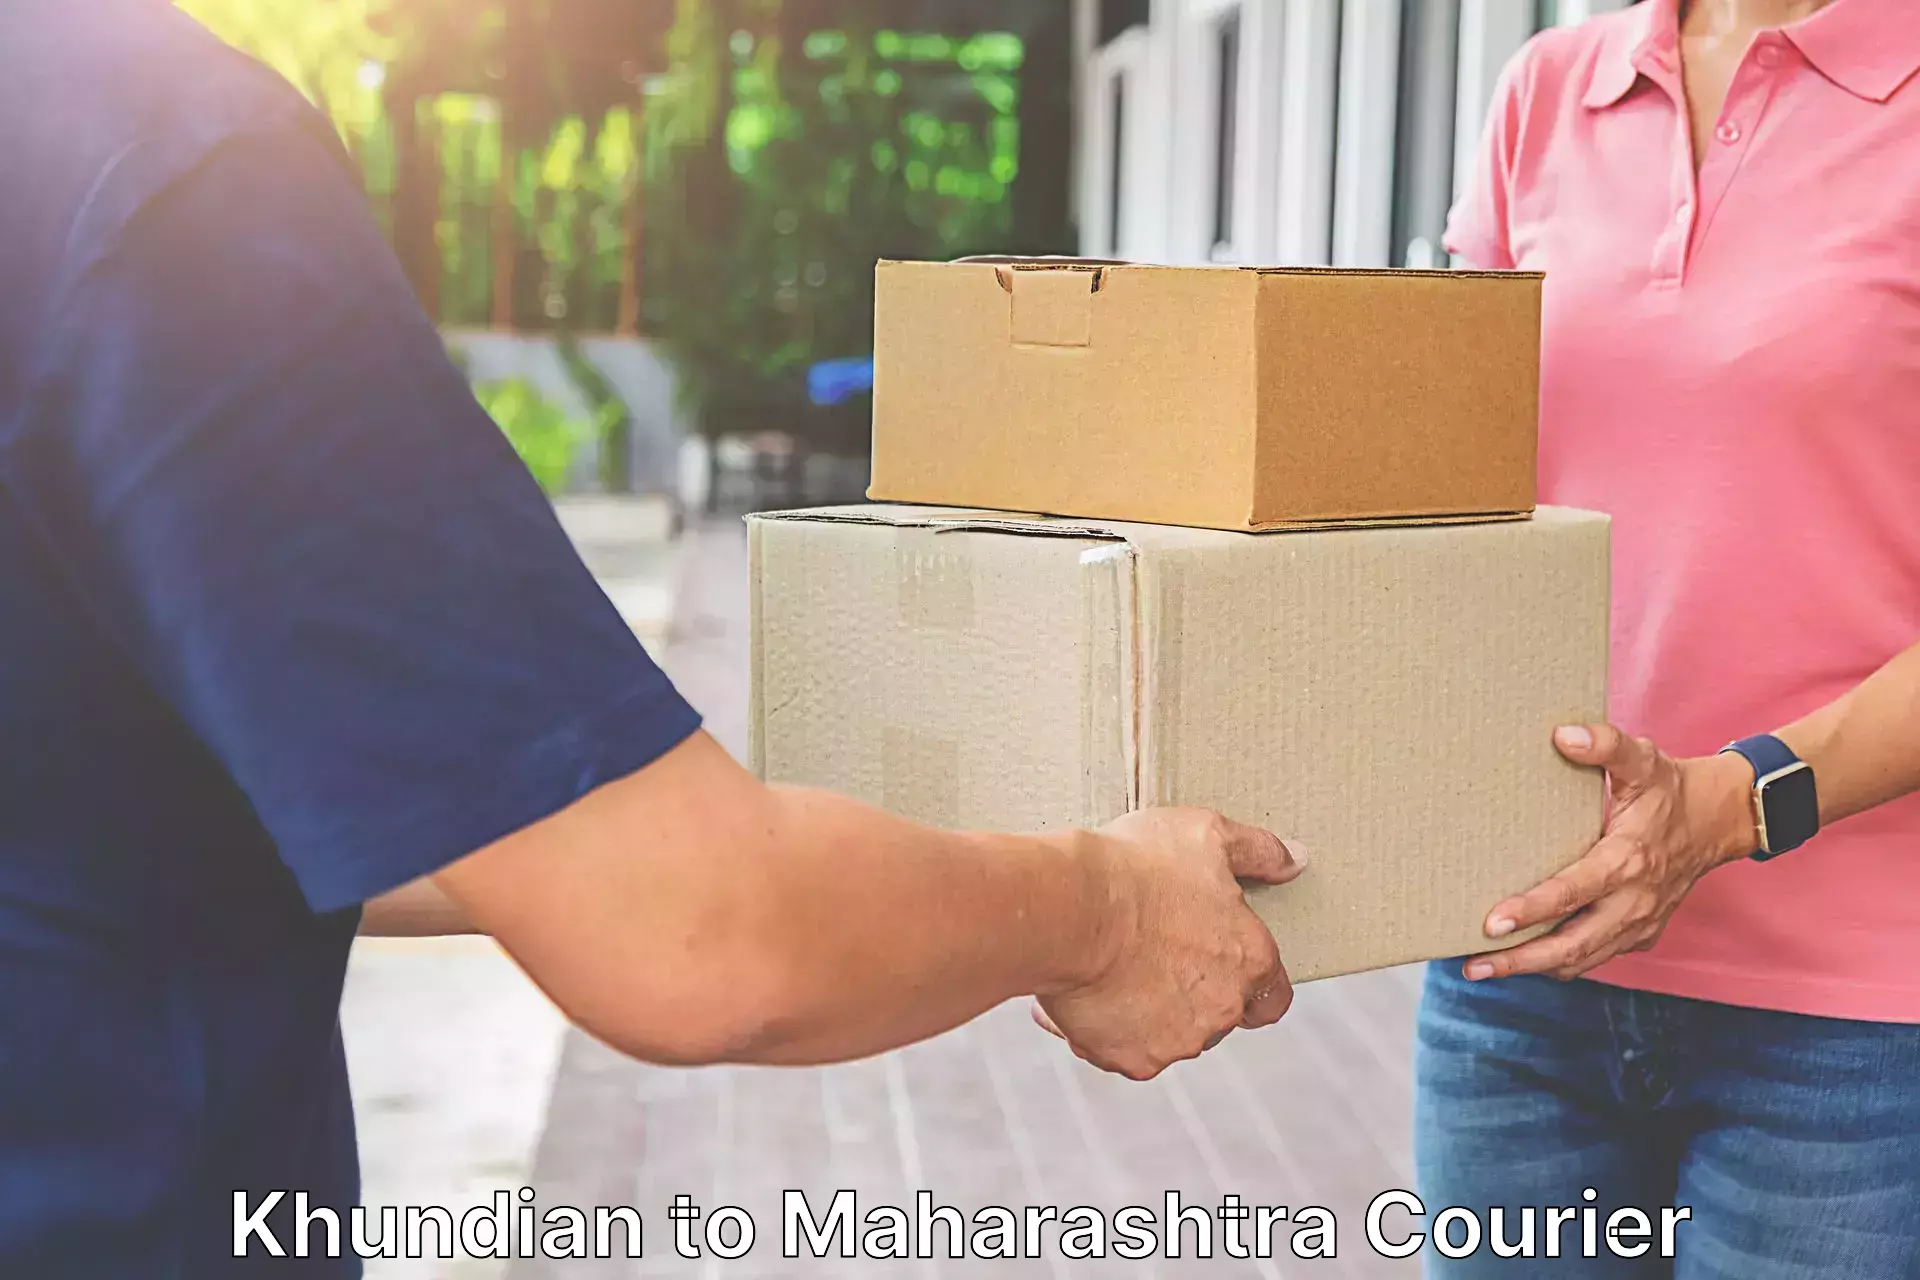 Same-day delivery options Khundian to Maharashtra